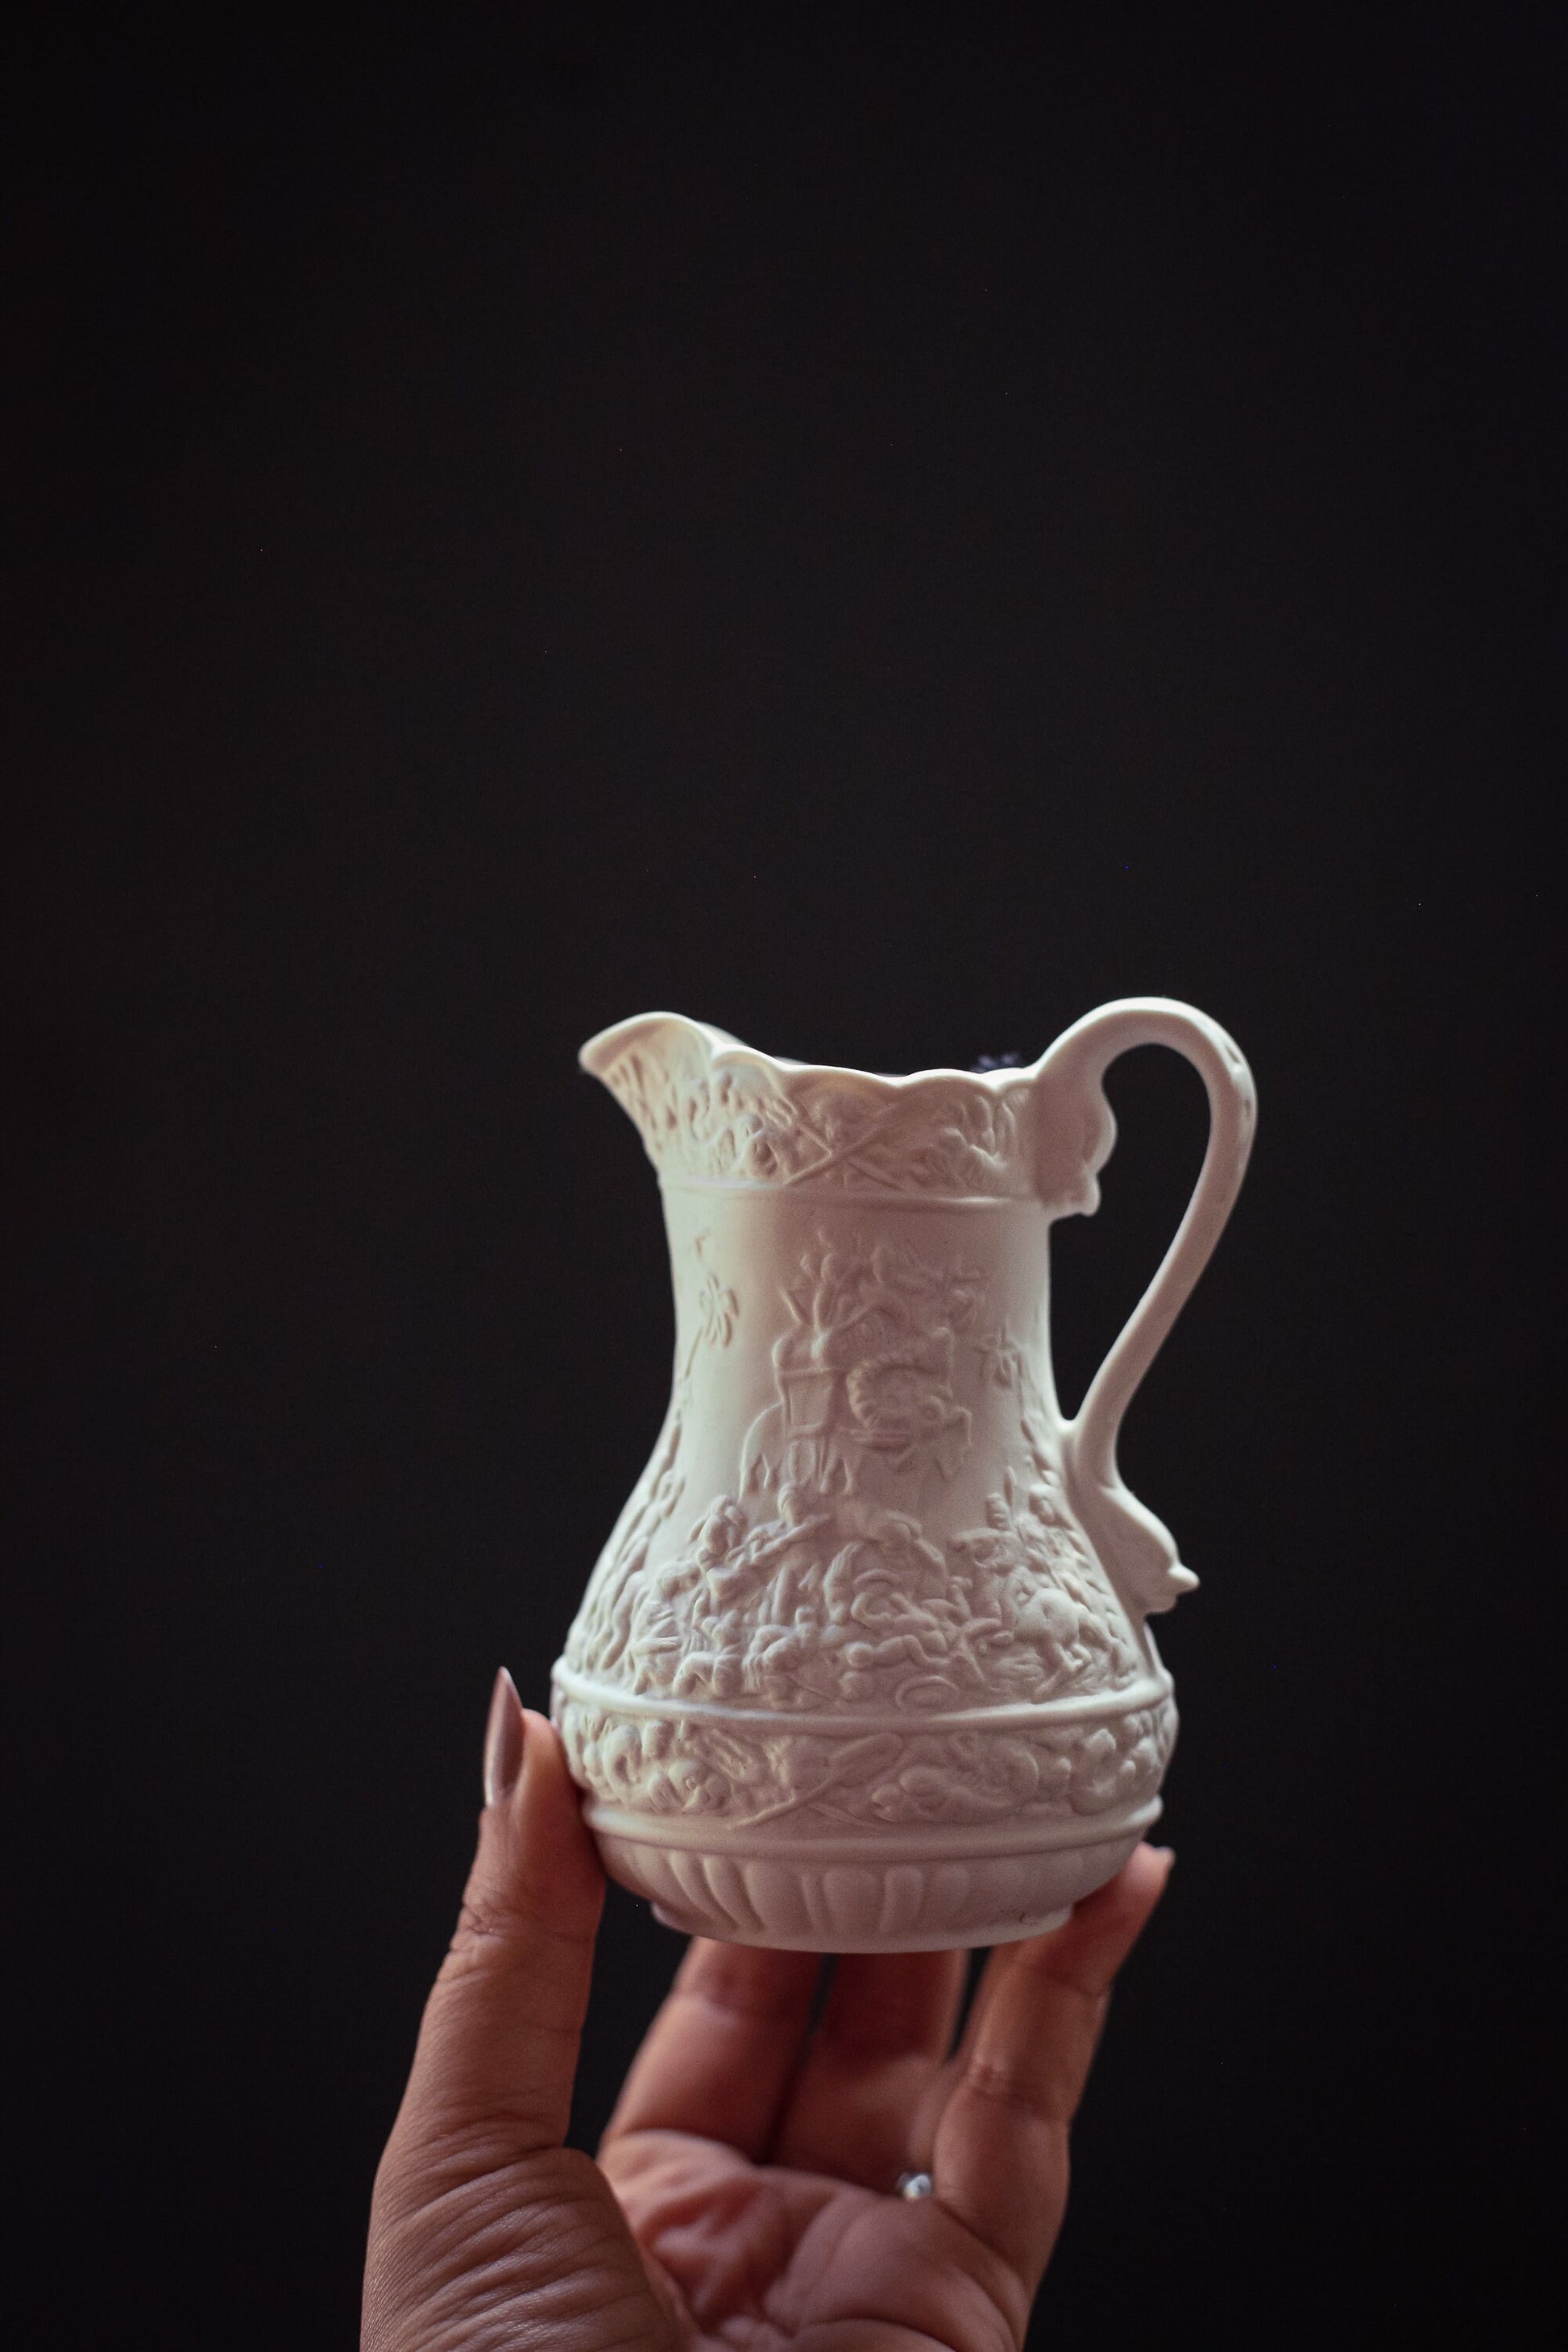 British Heritage Collection Portmeiron Parian ware - Vintage White Porcelain Pitcher